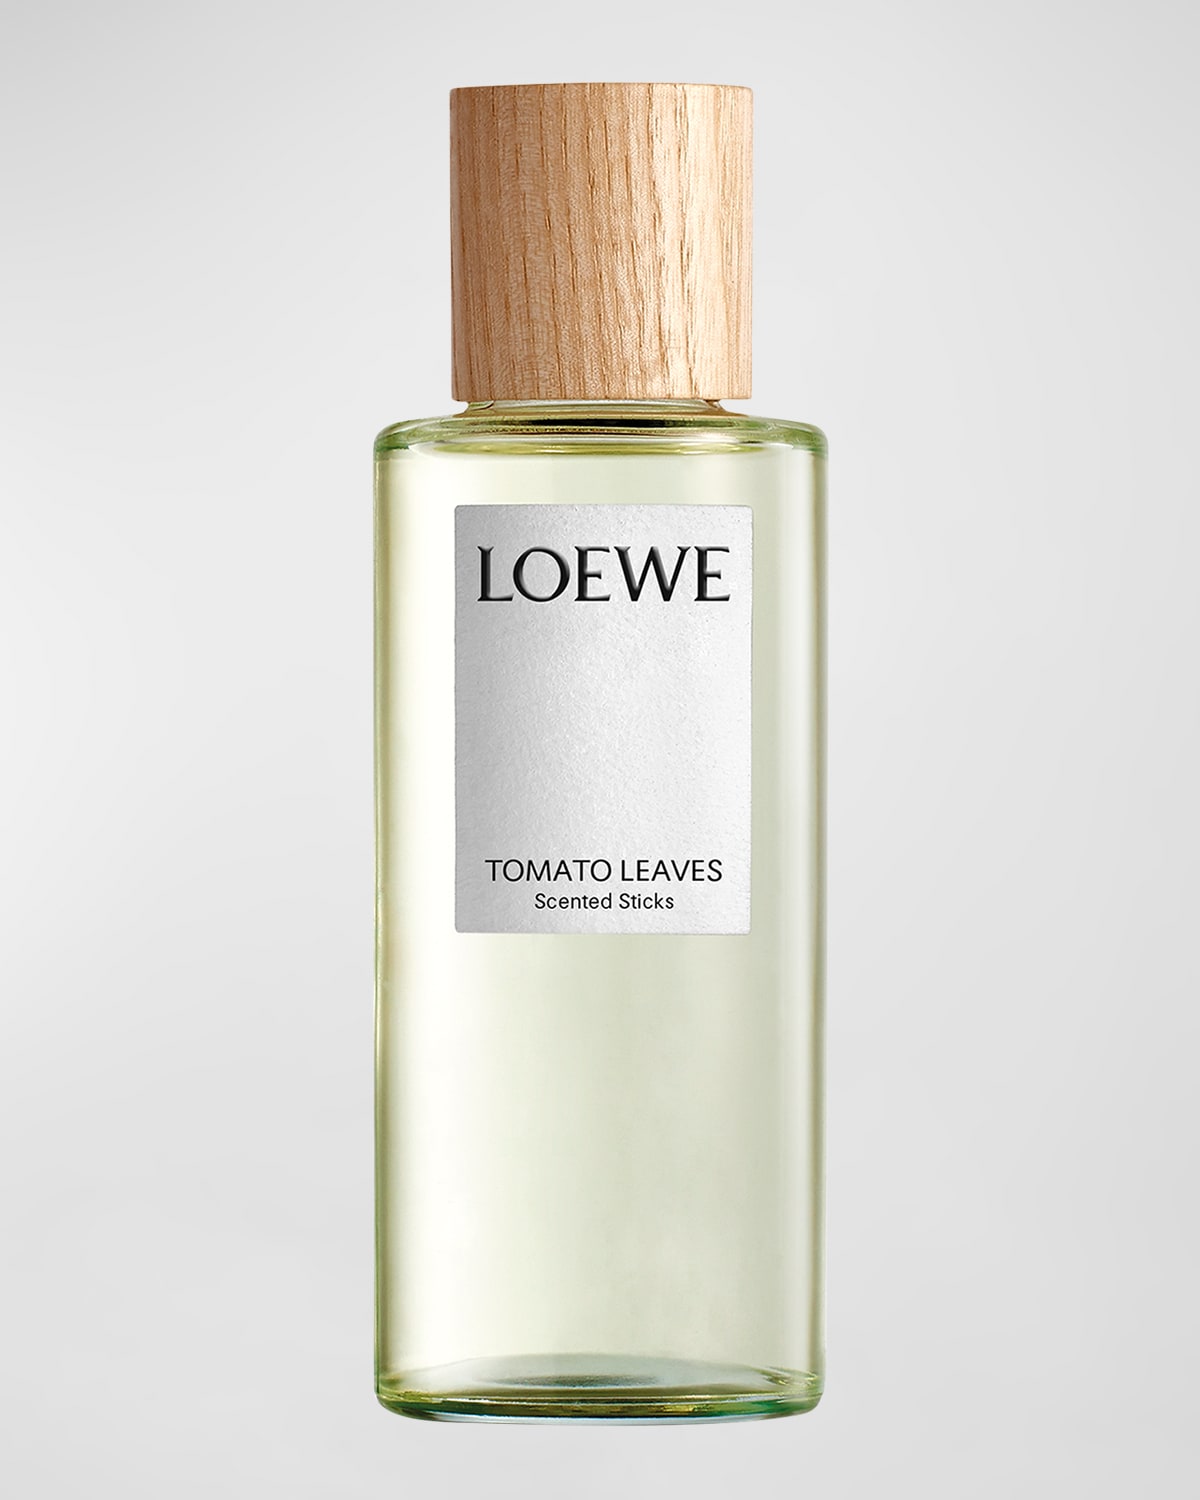 Loewe 8.3 oz. Tomato Leaves Room Diffuser Refill